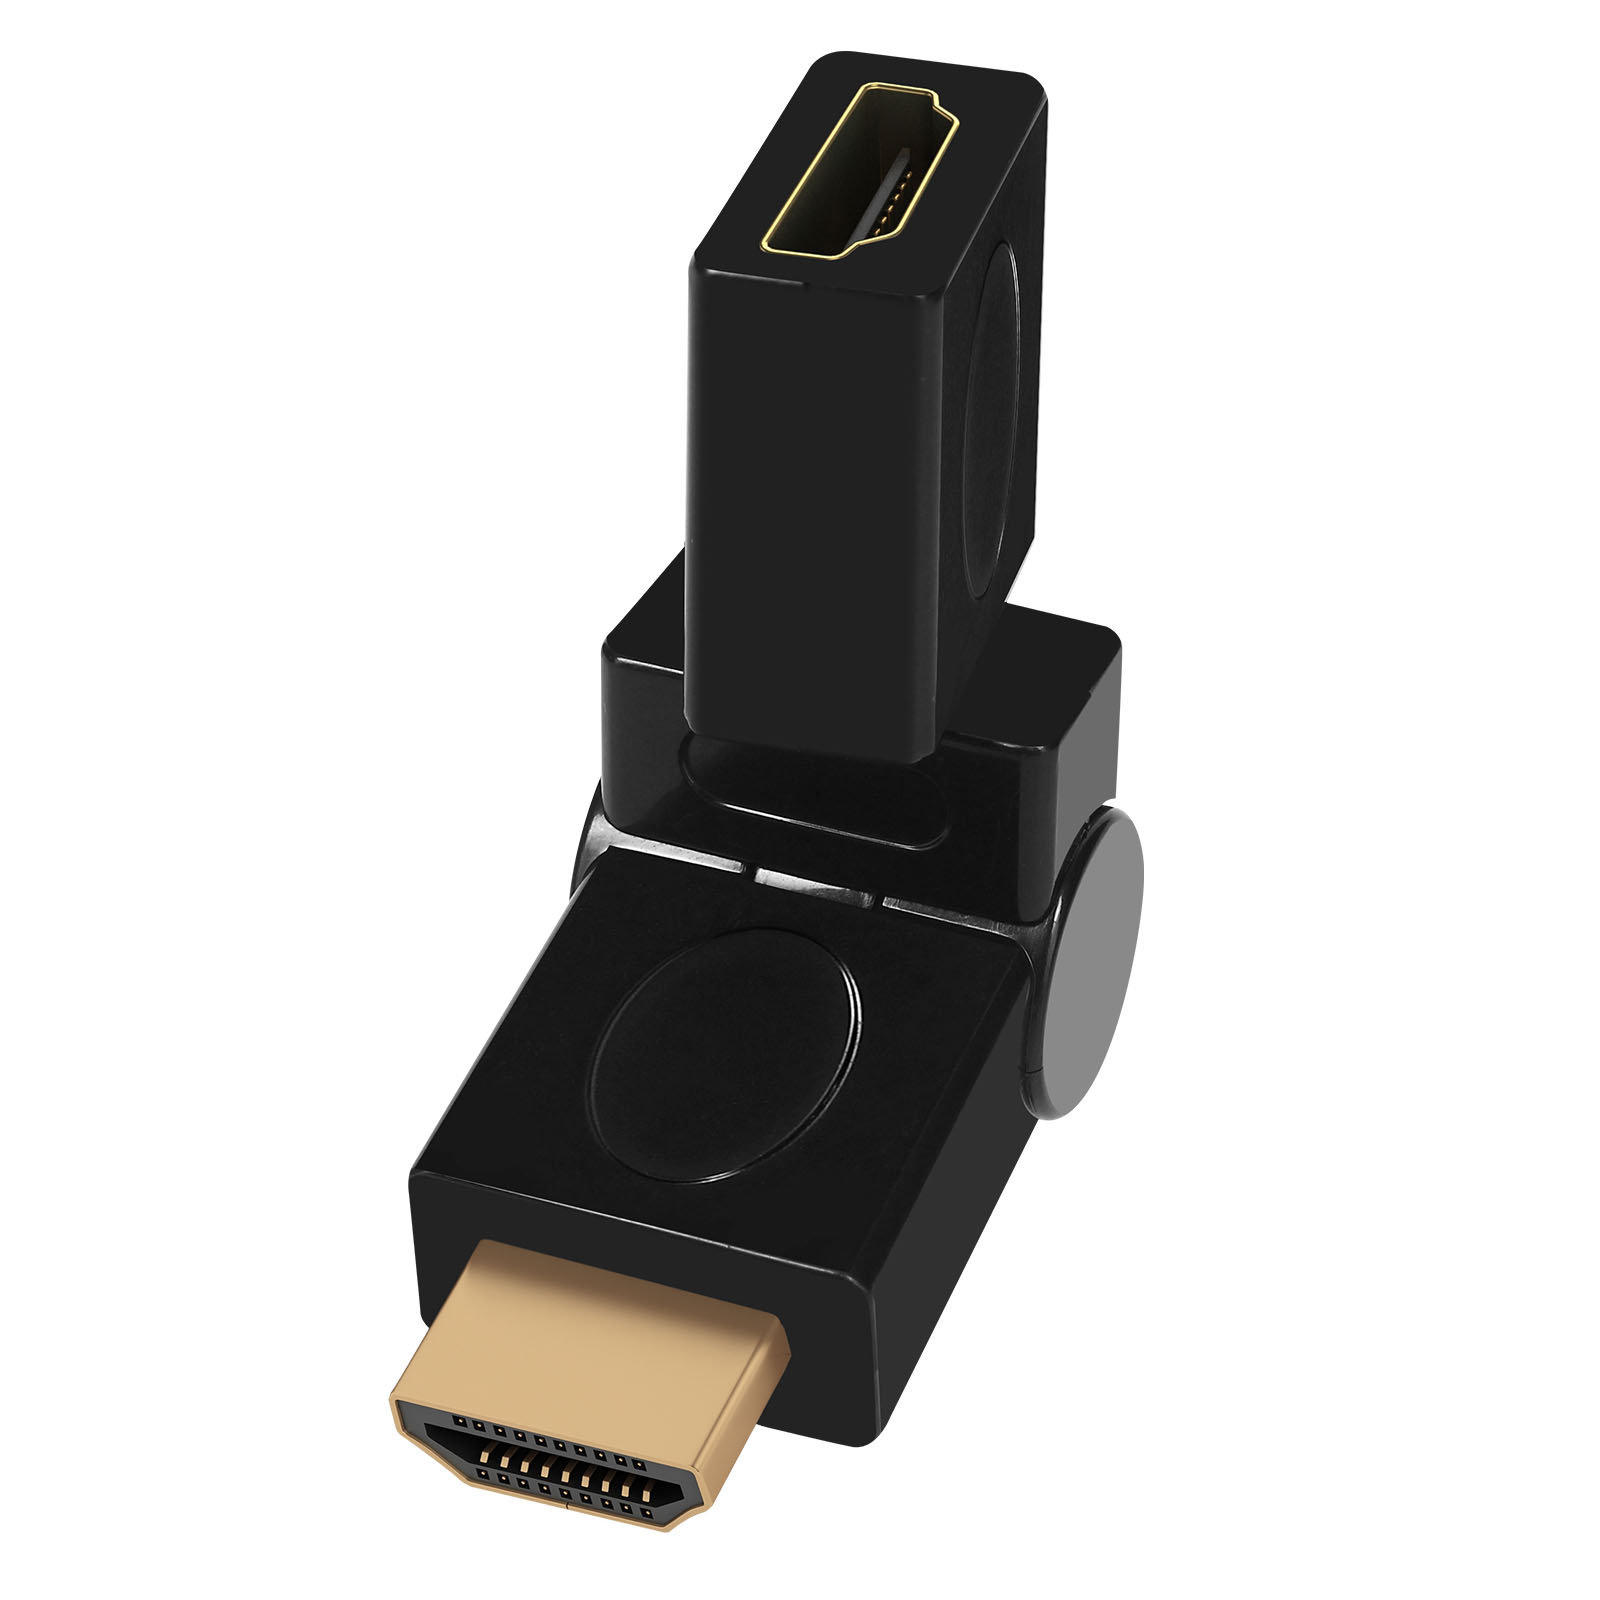 MAX EXCELL HDMI Universal, Abgewinkelt Schwarz Videoadapter Adapter